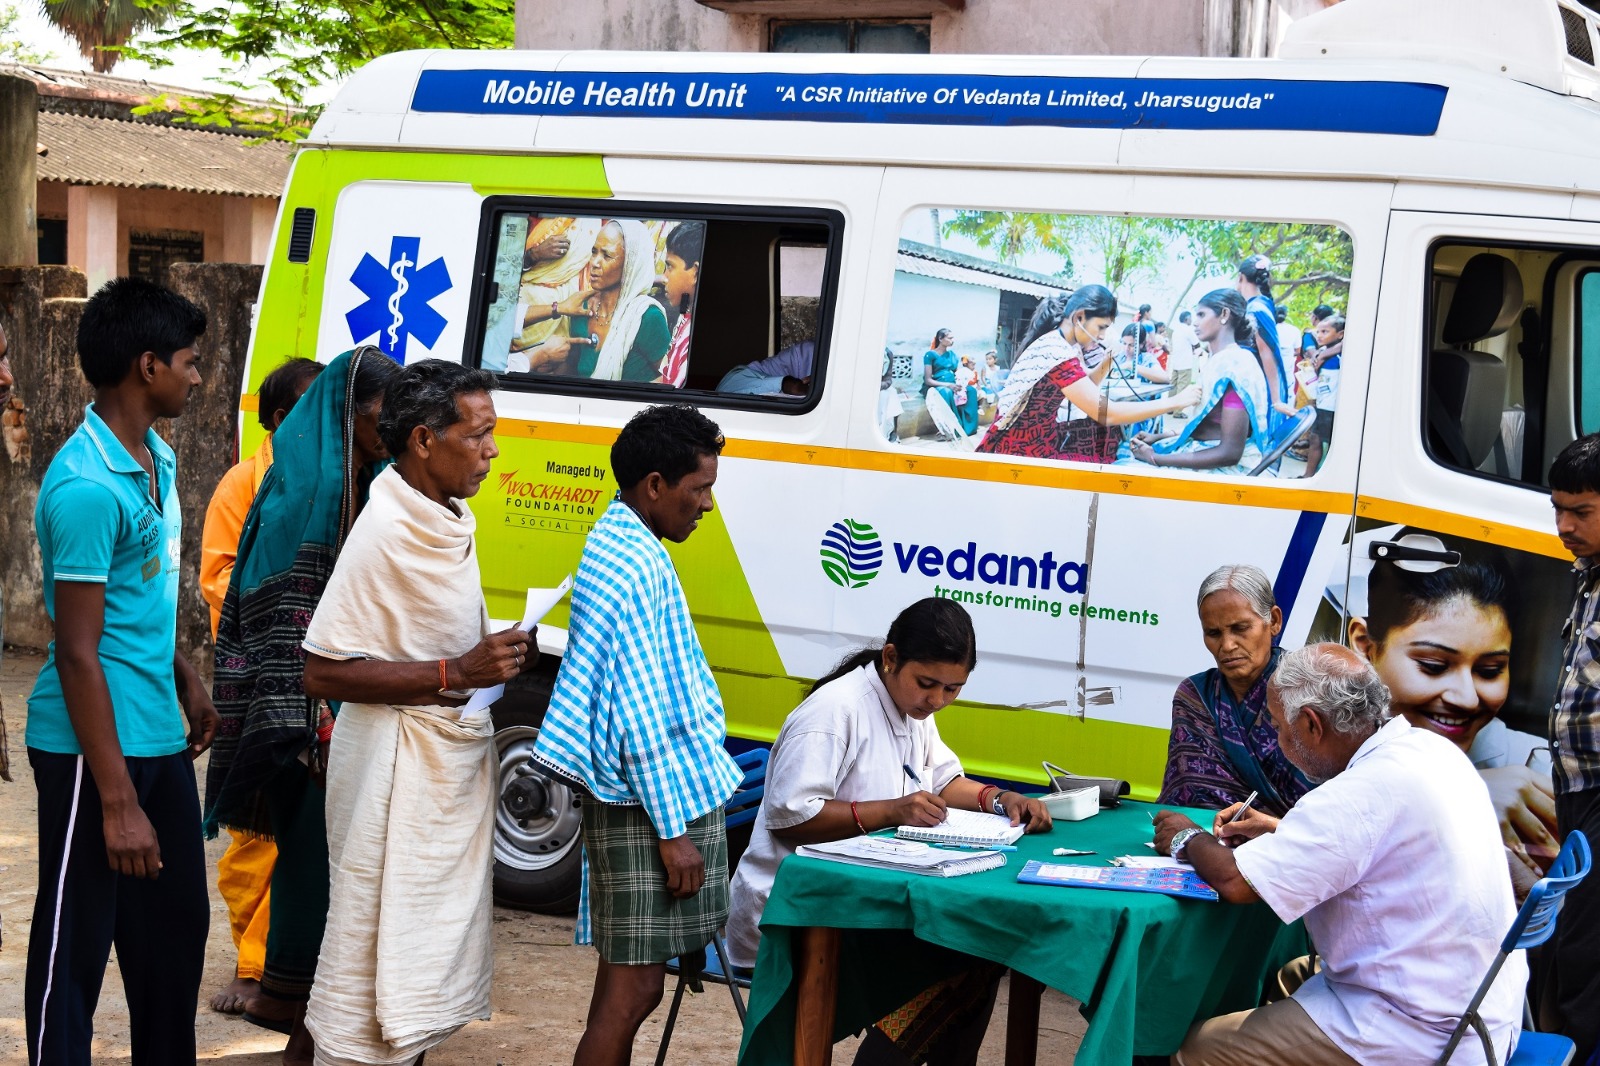 Vedanta Aluminium’s Healthcare Initiatives Benefit around 4 Lakh People in Odisha & Chhattisgarh